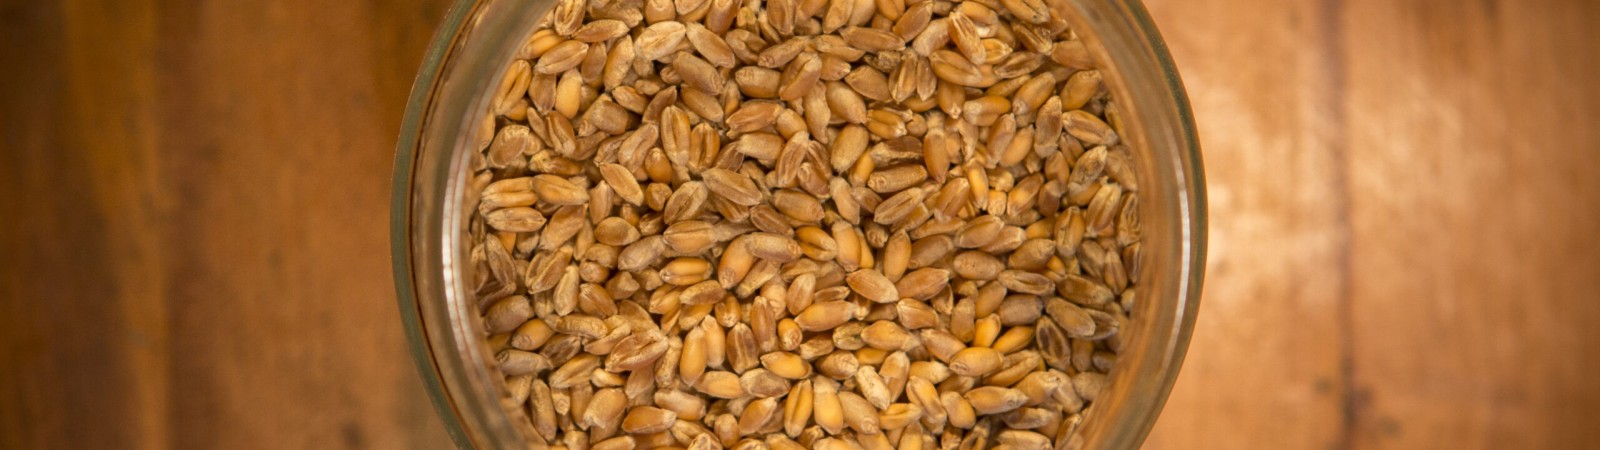 Farine de blé